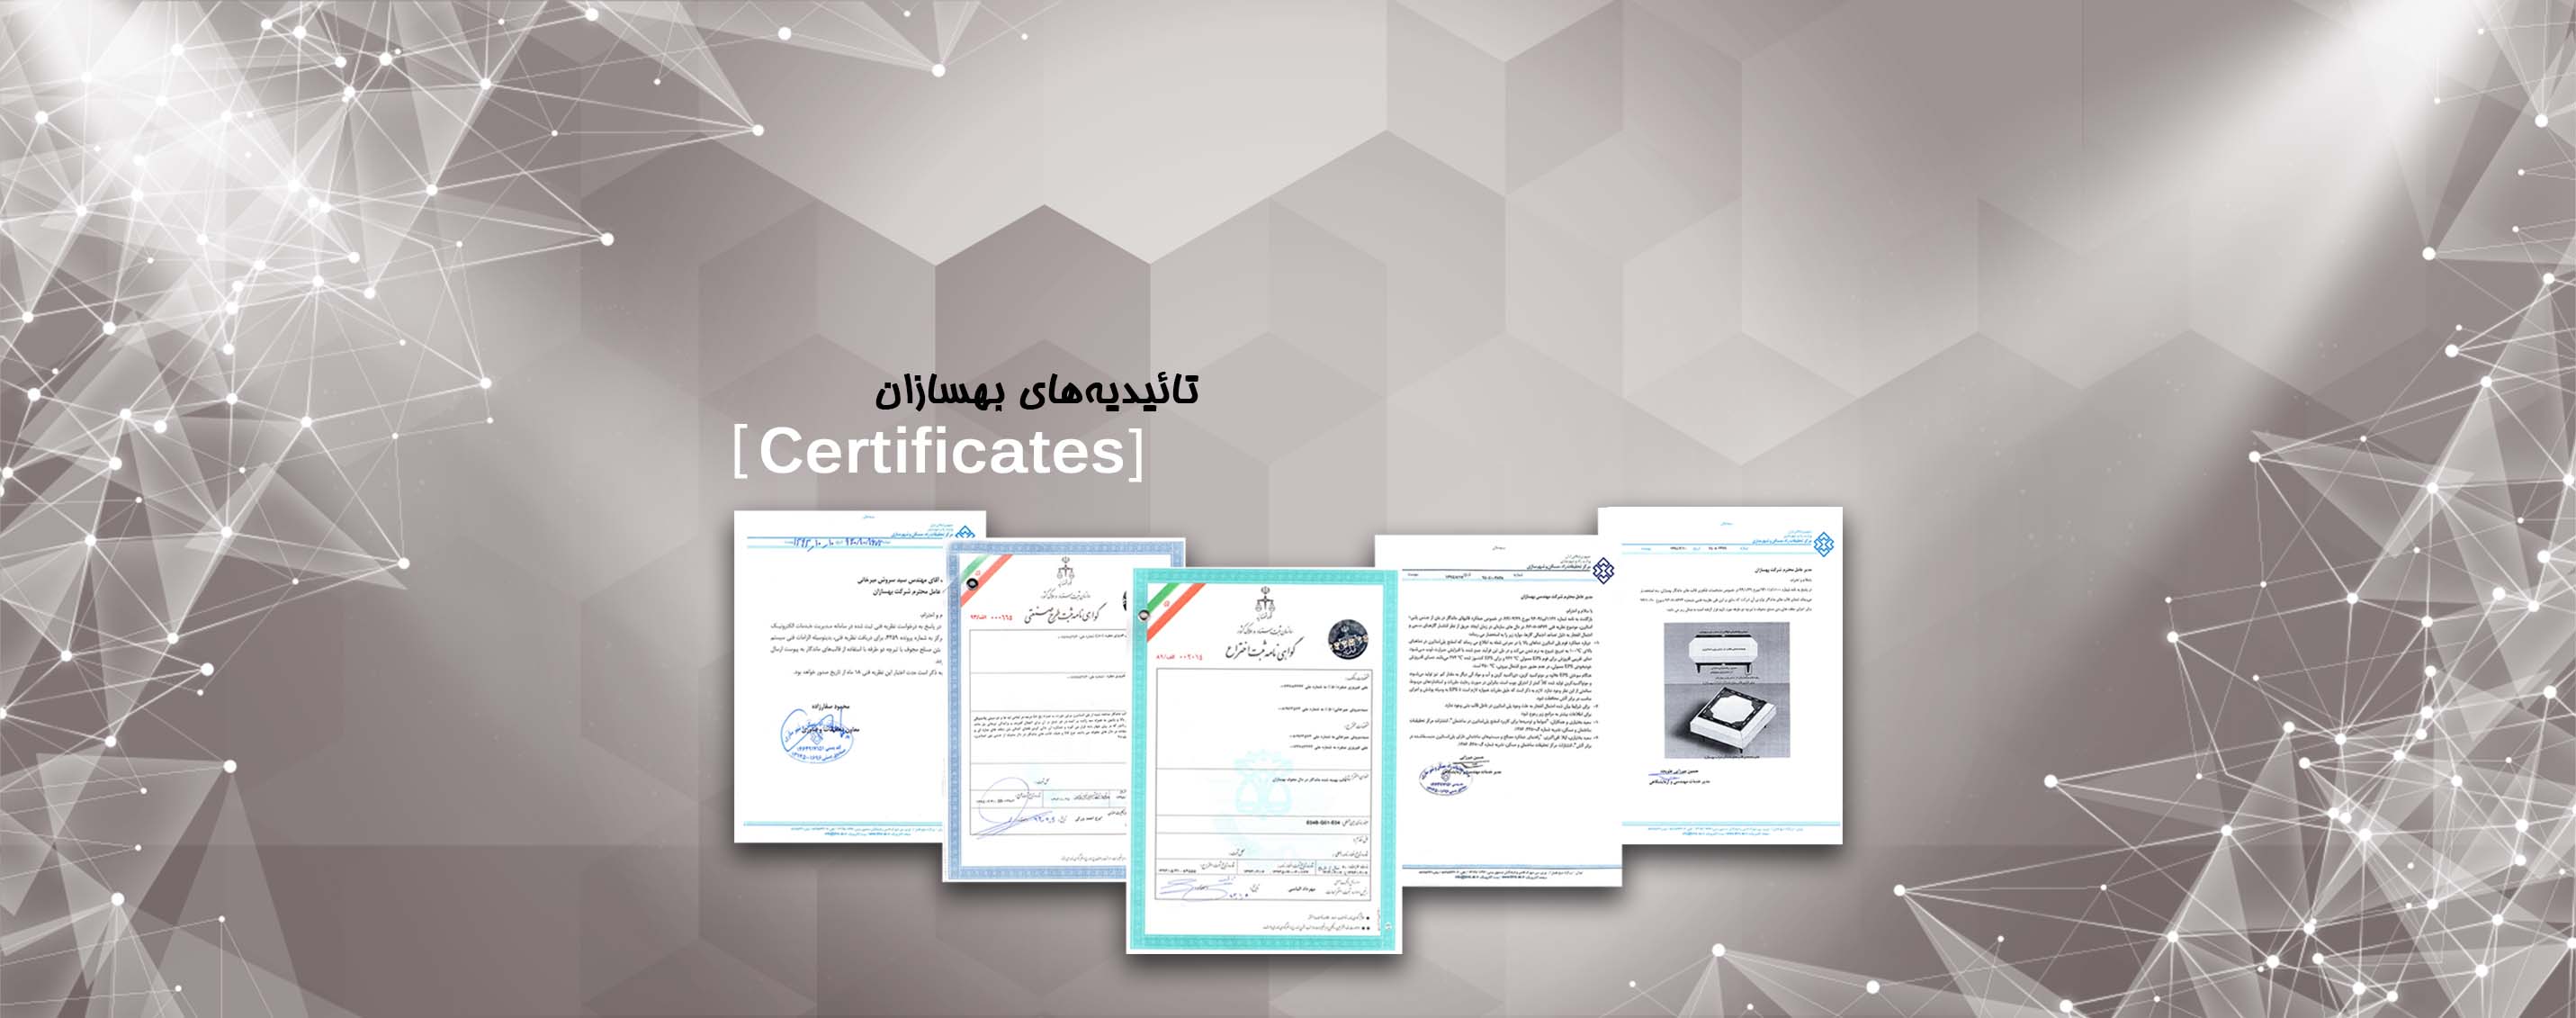 certificate final